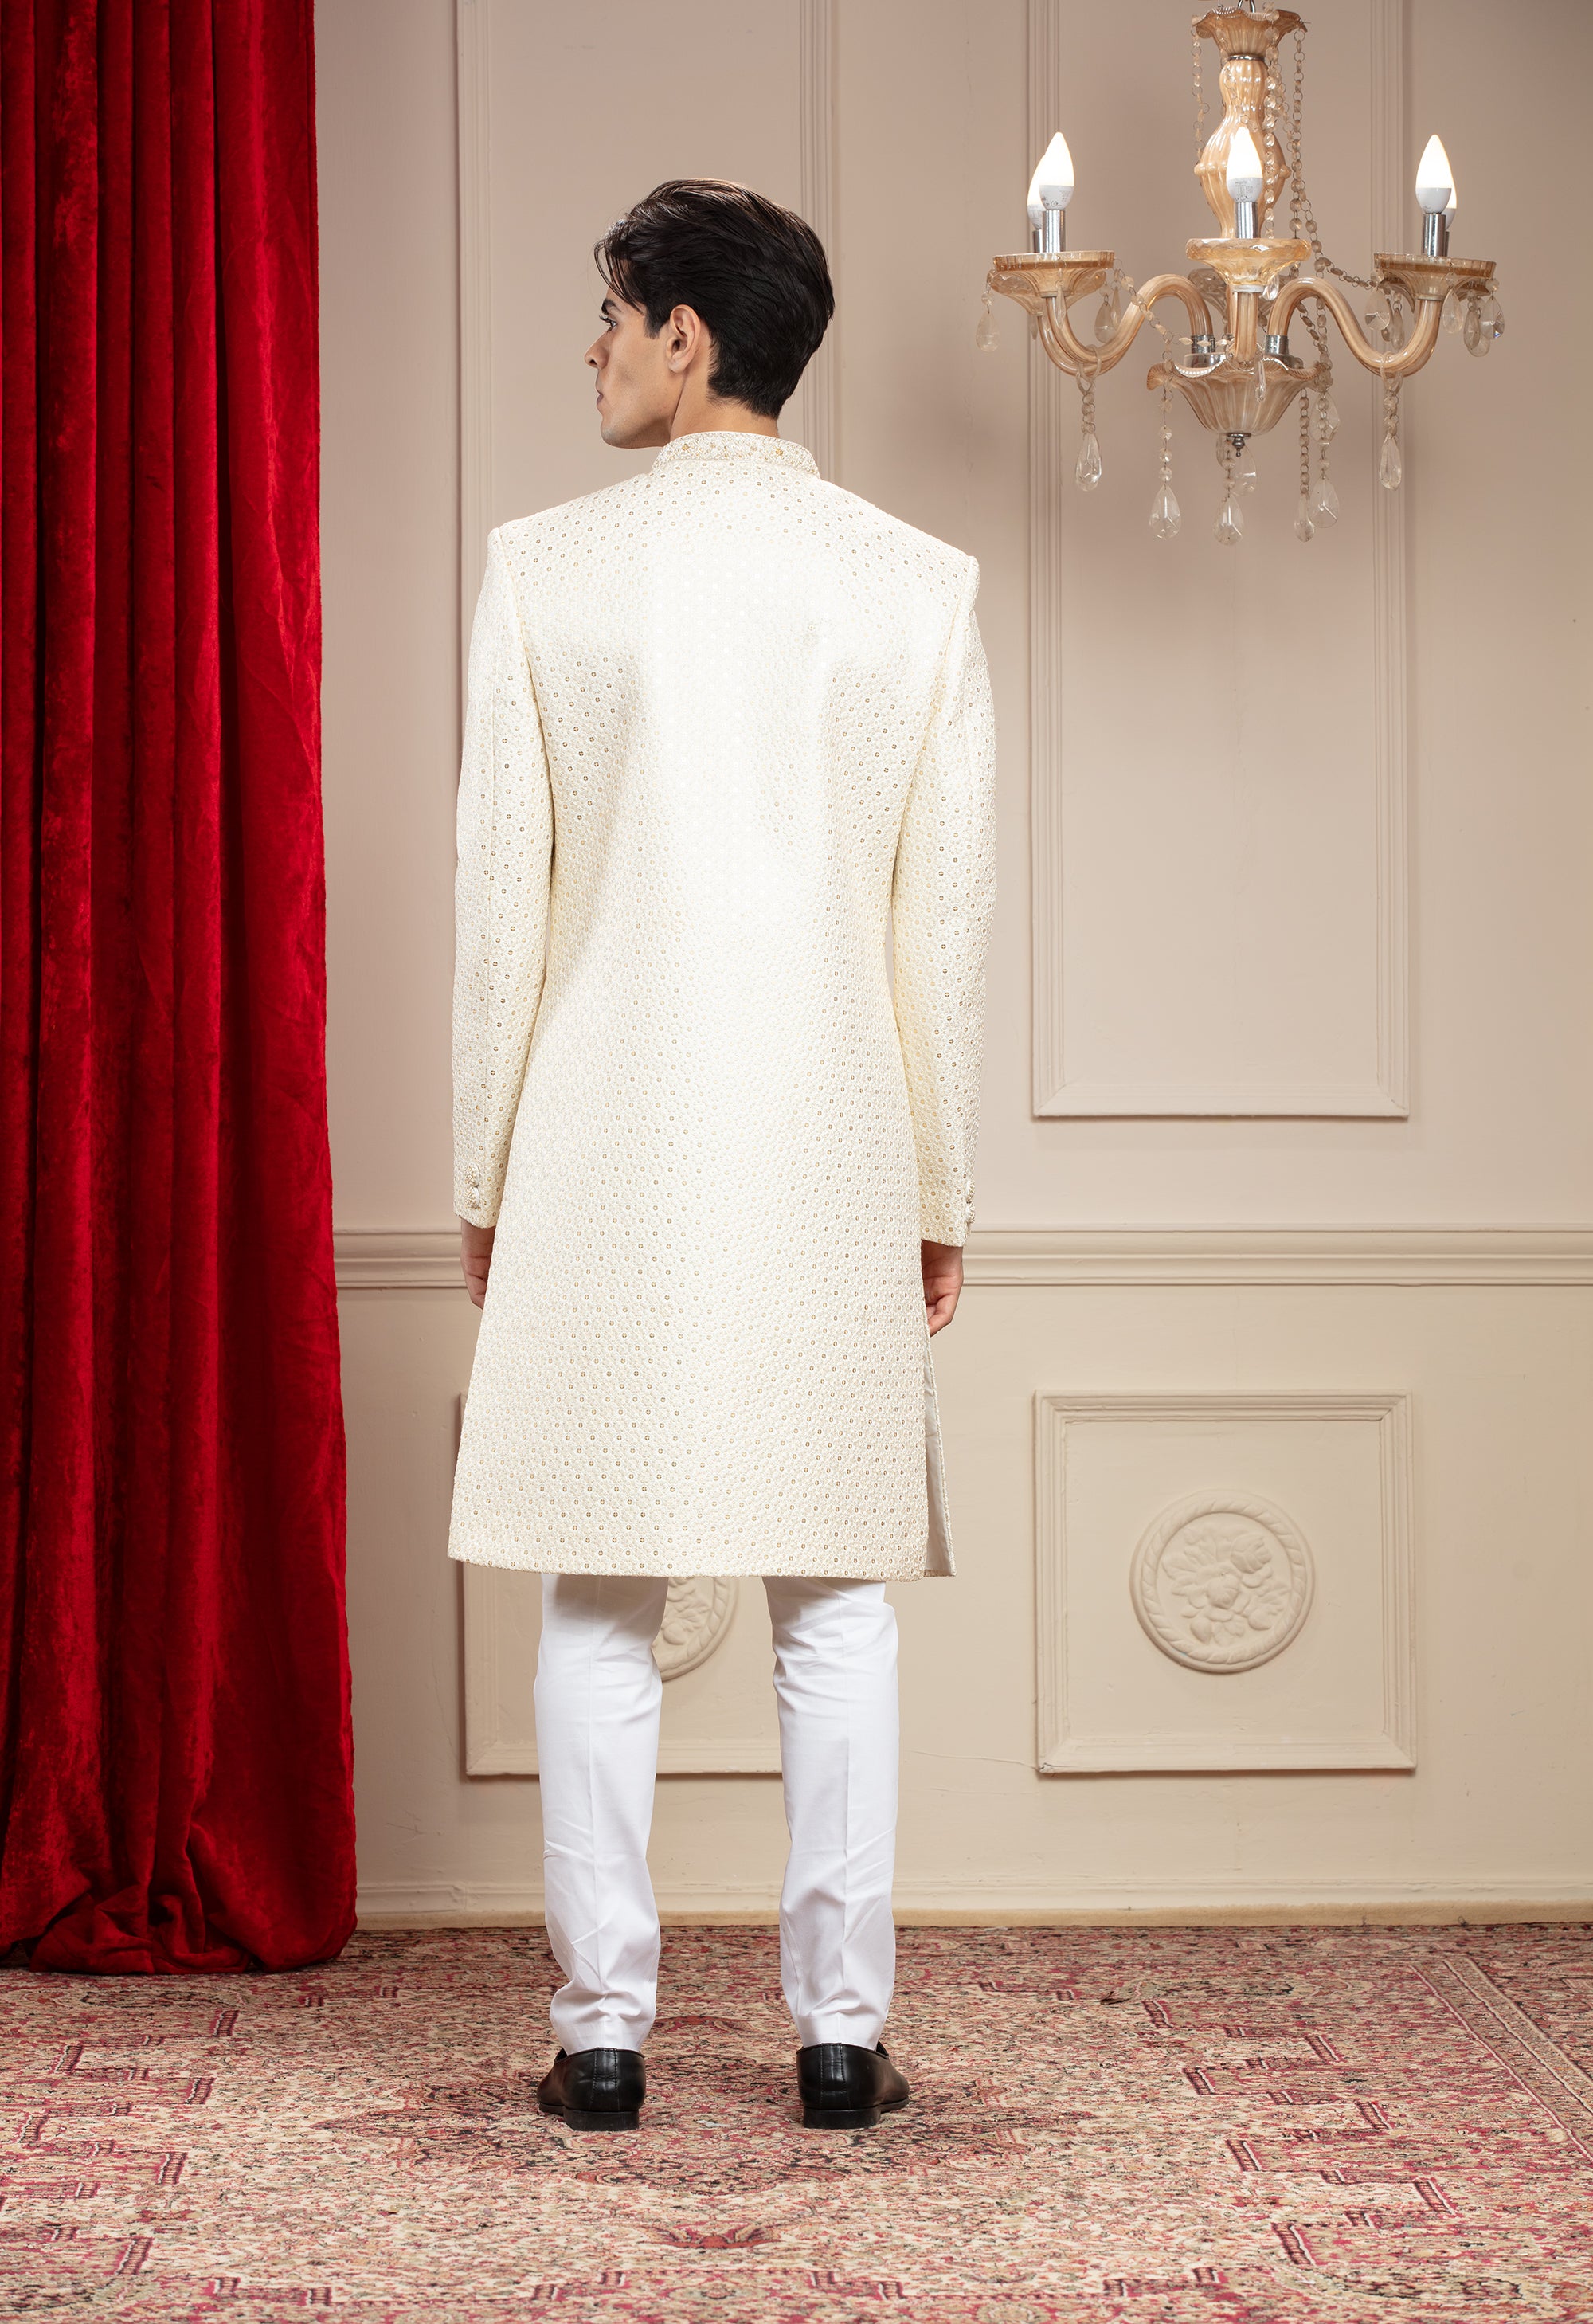 Alabaster White Lucknowi Sherwani with matching Dupatta and embellishments